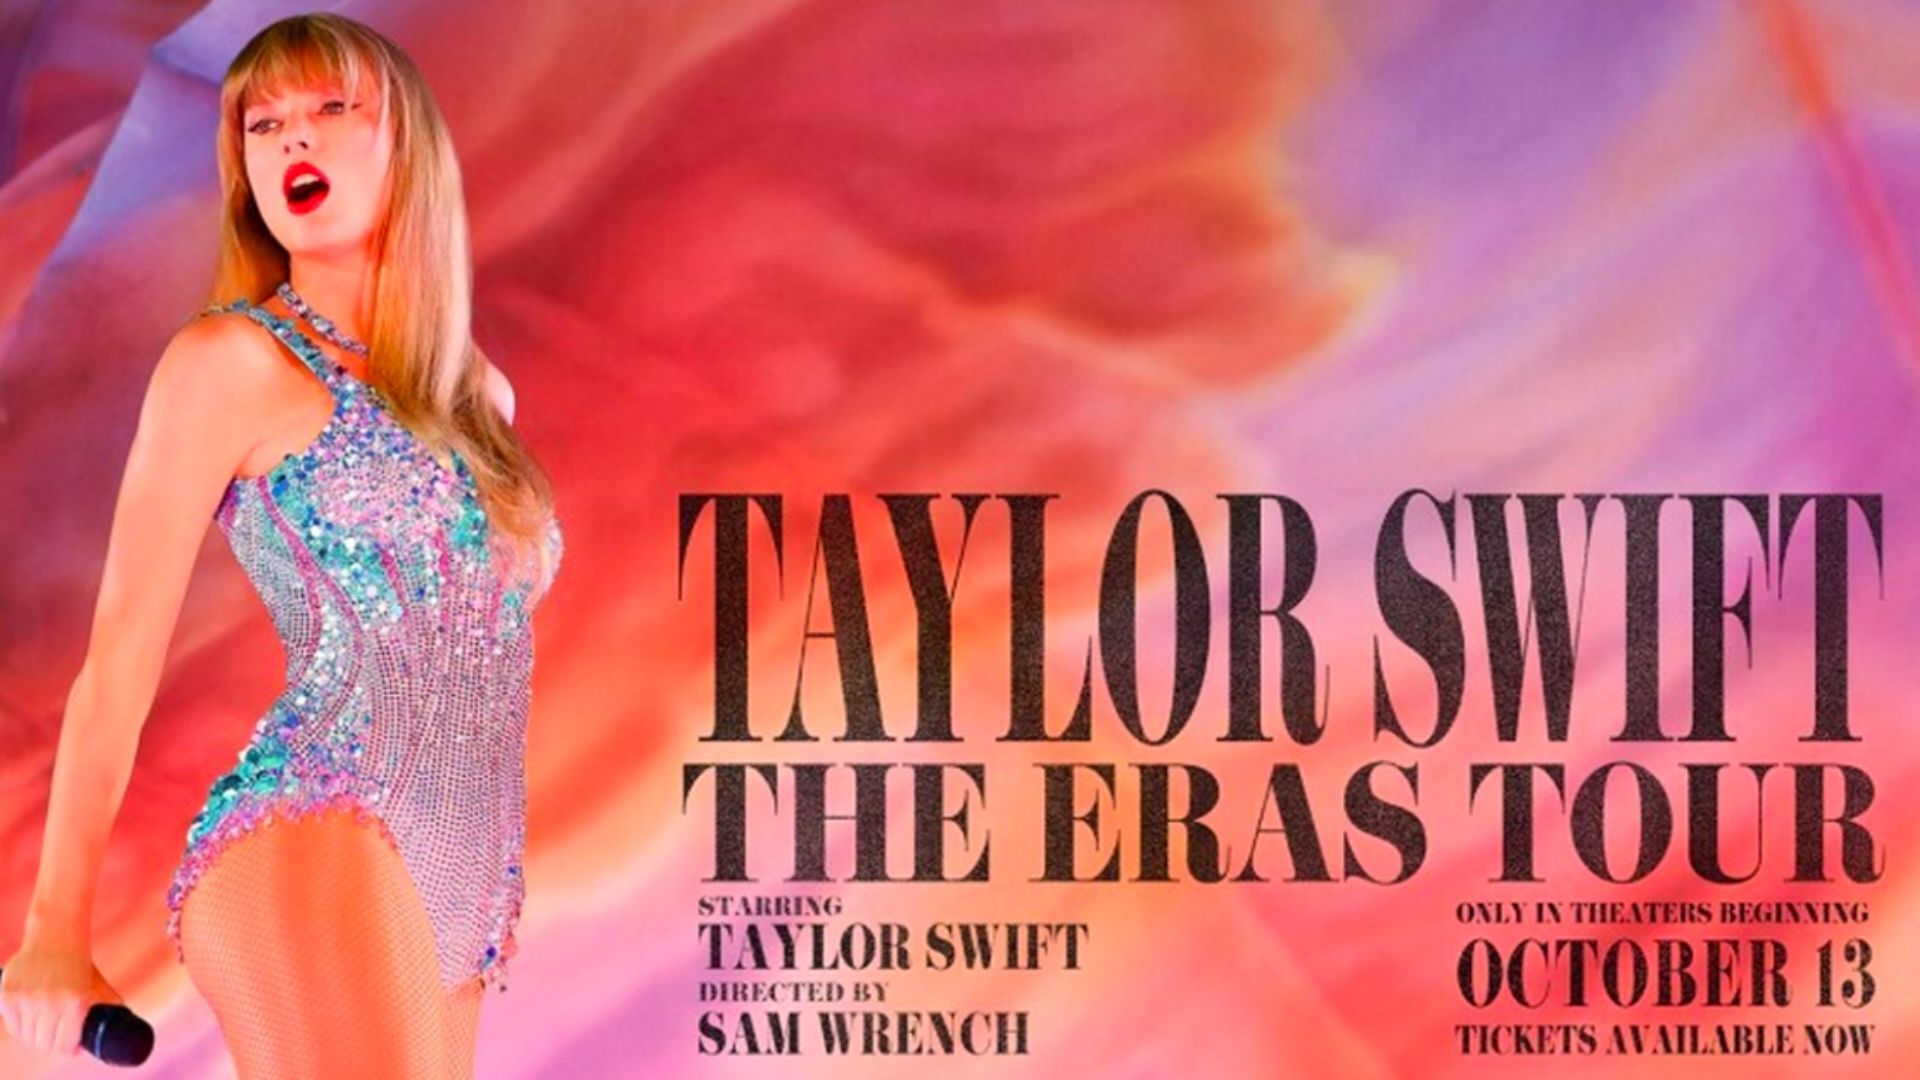 “Taylor Swift The Eras Tour” film made 6.2 million JUST in Cineplex